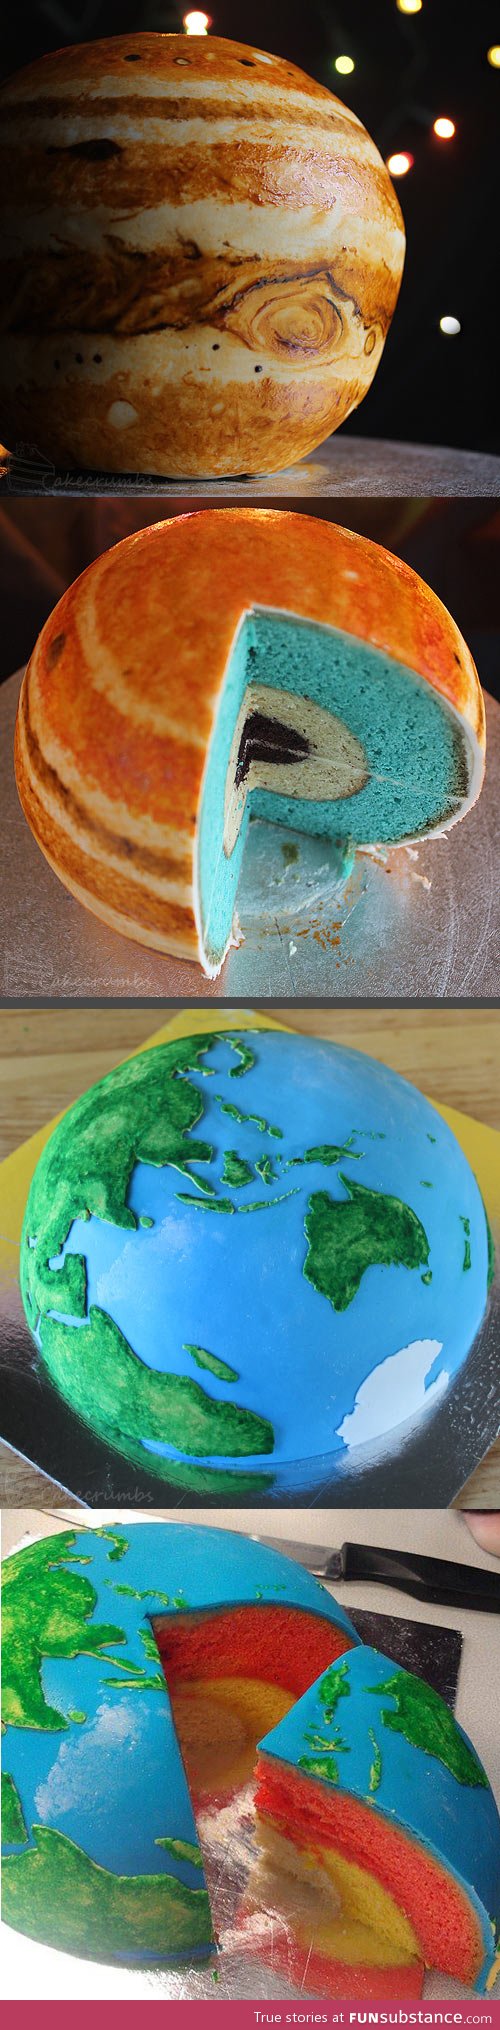 Planet cakes